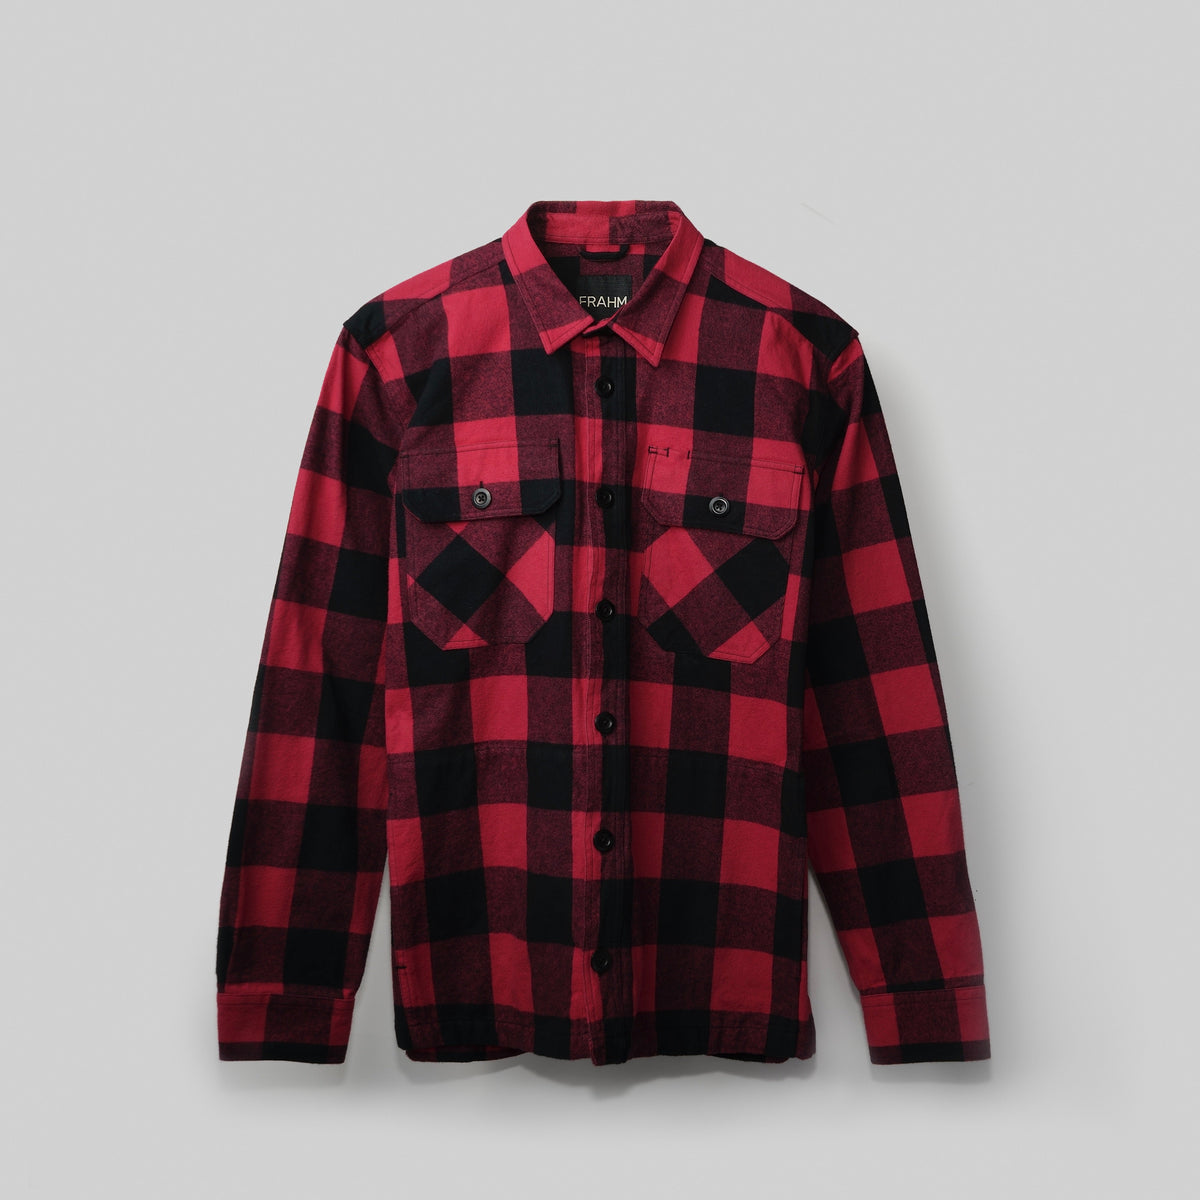 FRAHM Jacket In Stock S / Raspberry Red and Black Heavy Tartan Overshirt